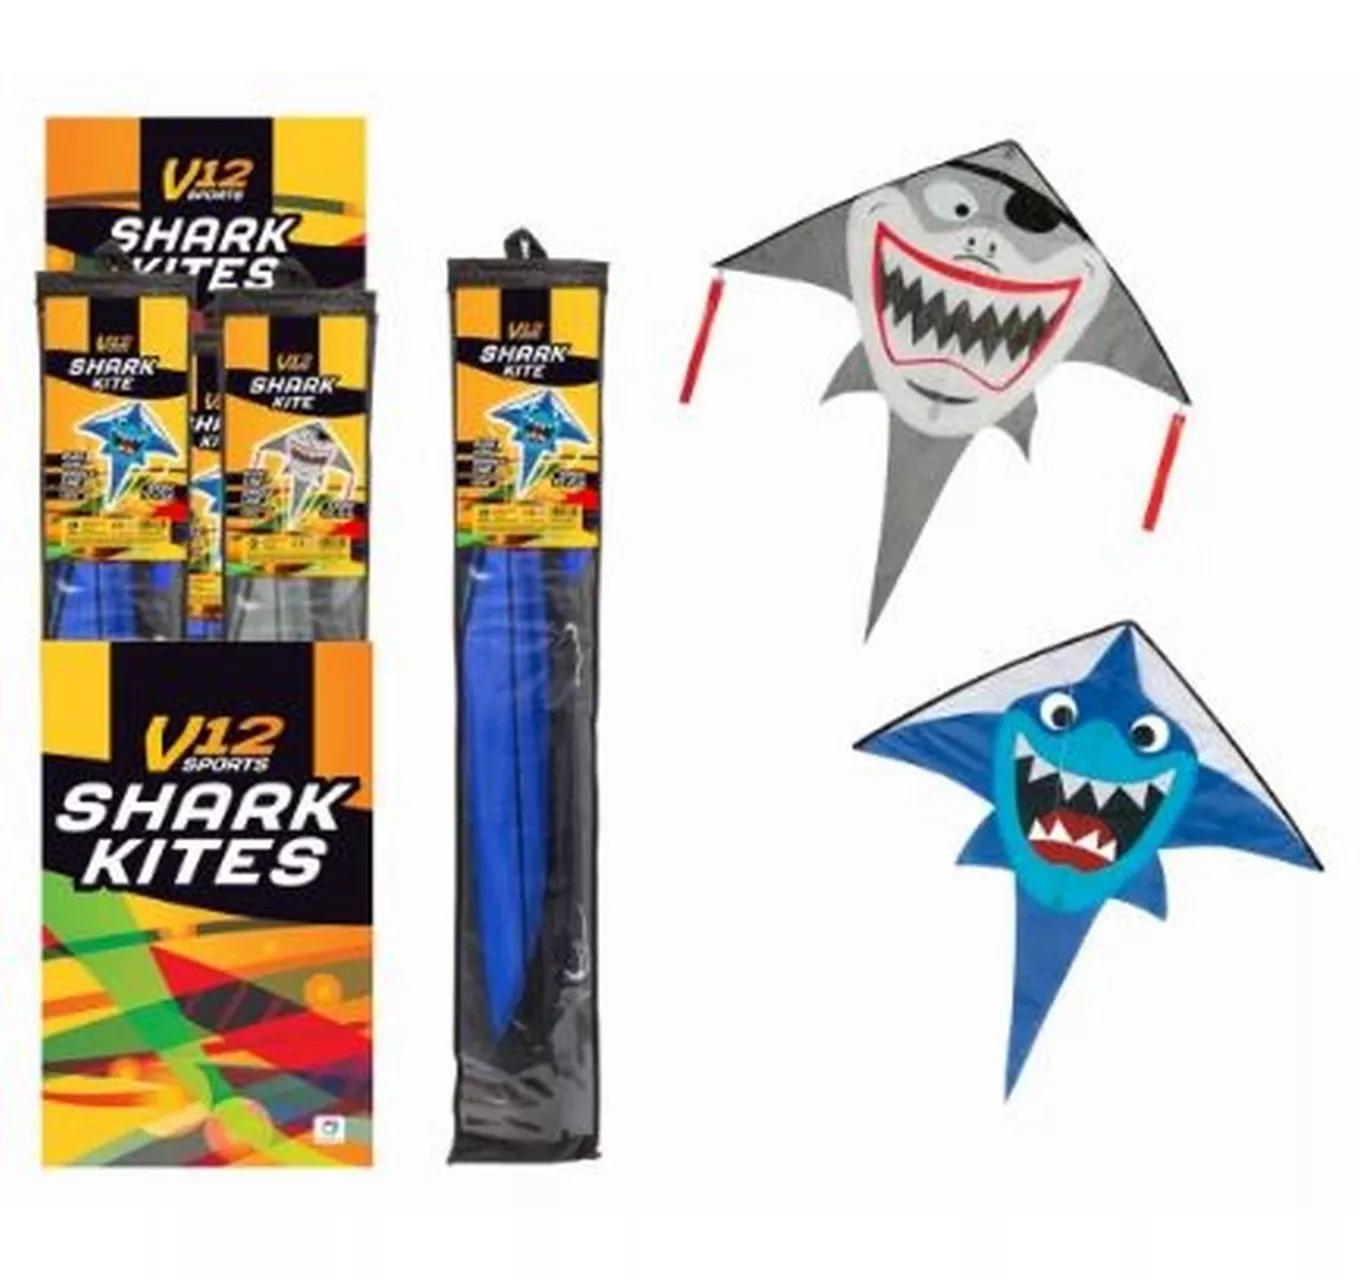 Shark Kites - Each